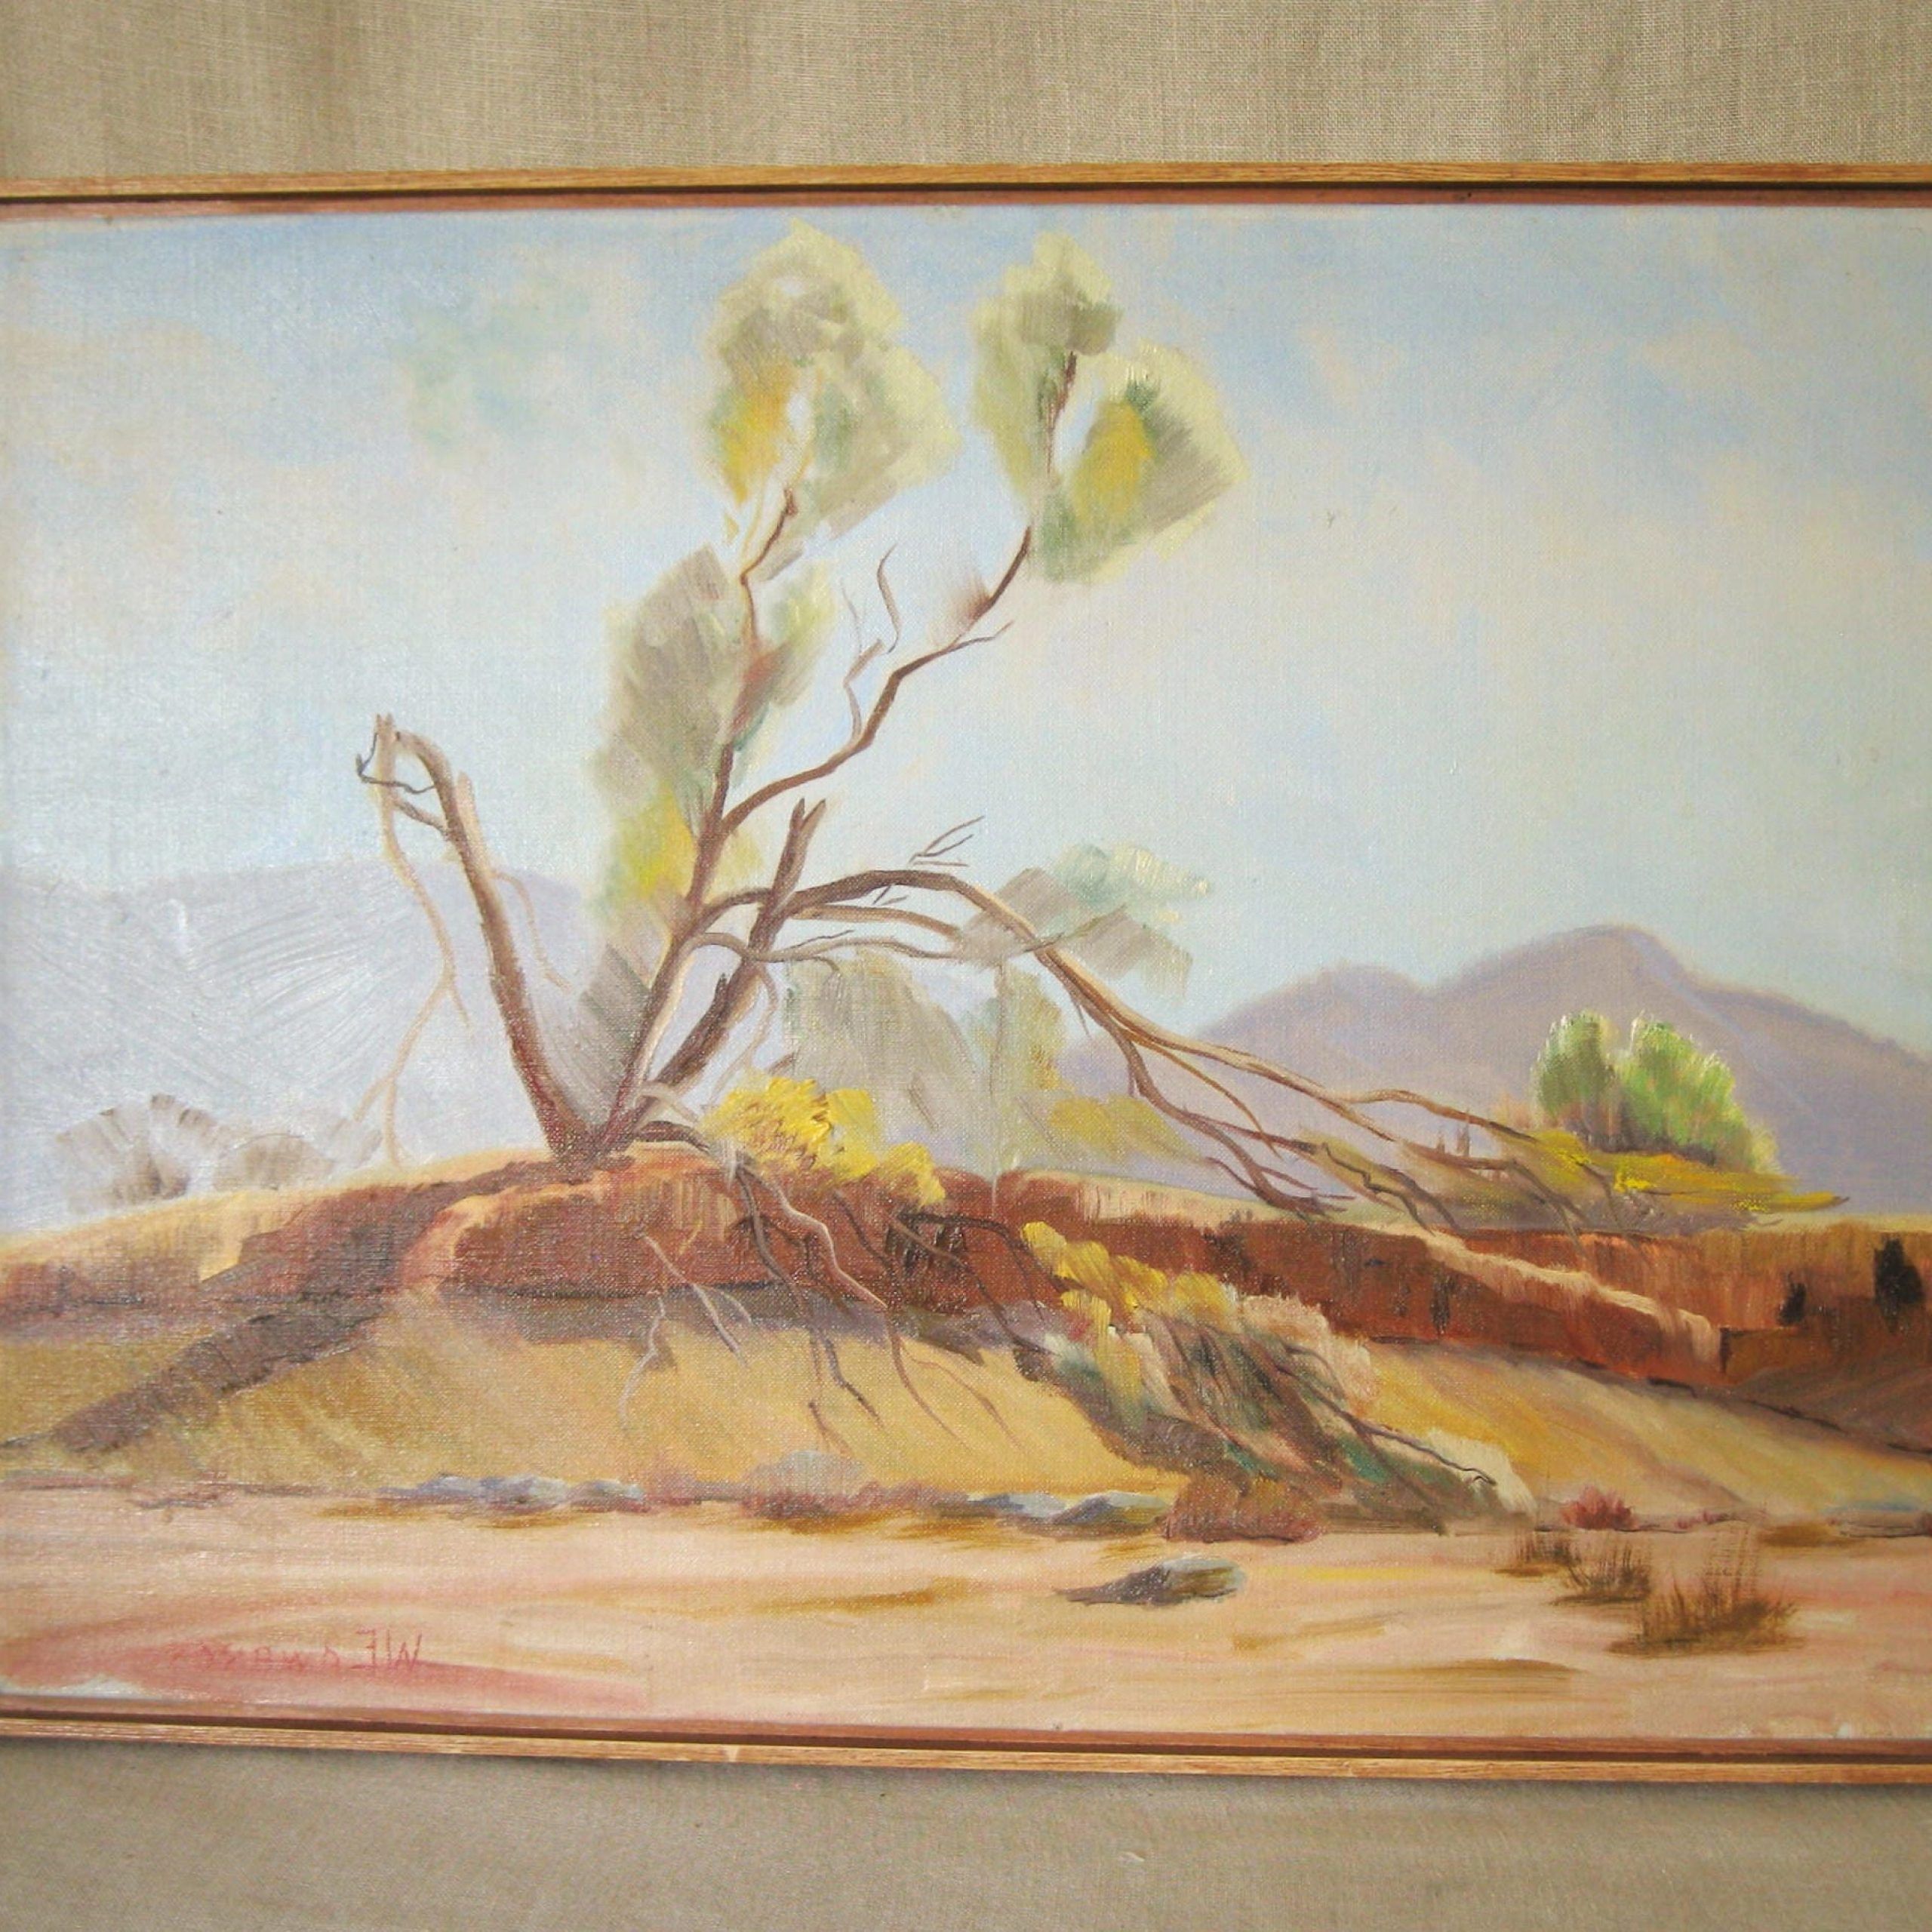 Most Recent Desert Inn Framed Art Prints For Vintage Landscape Painting, Mid Century, California (View 11 of 20)